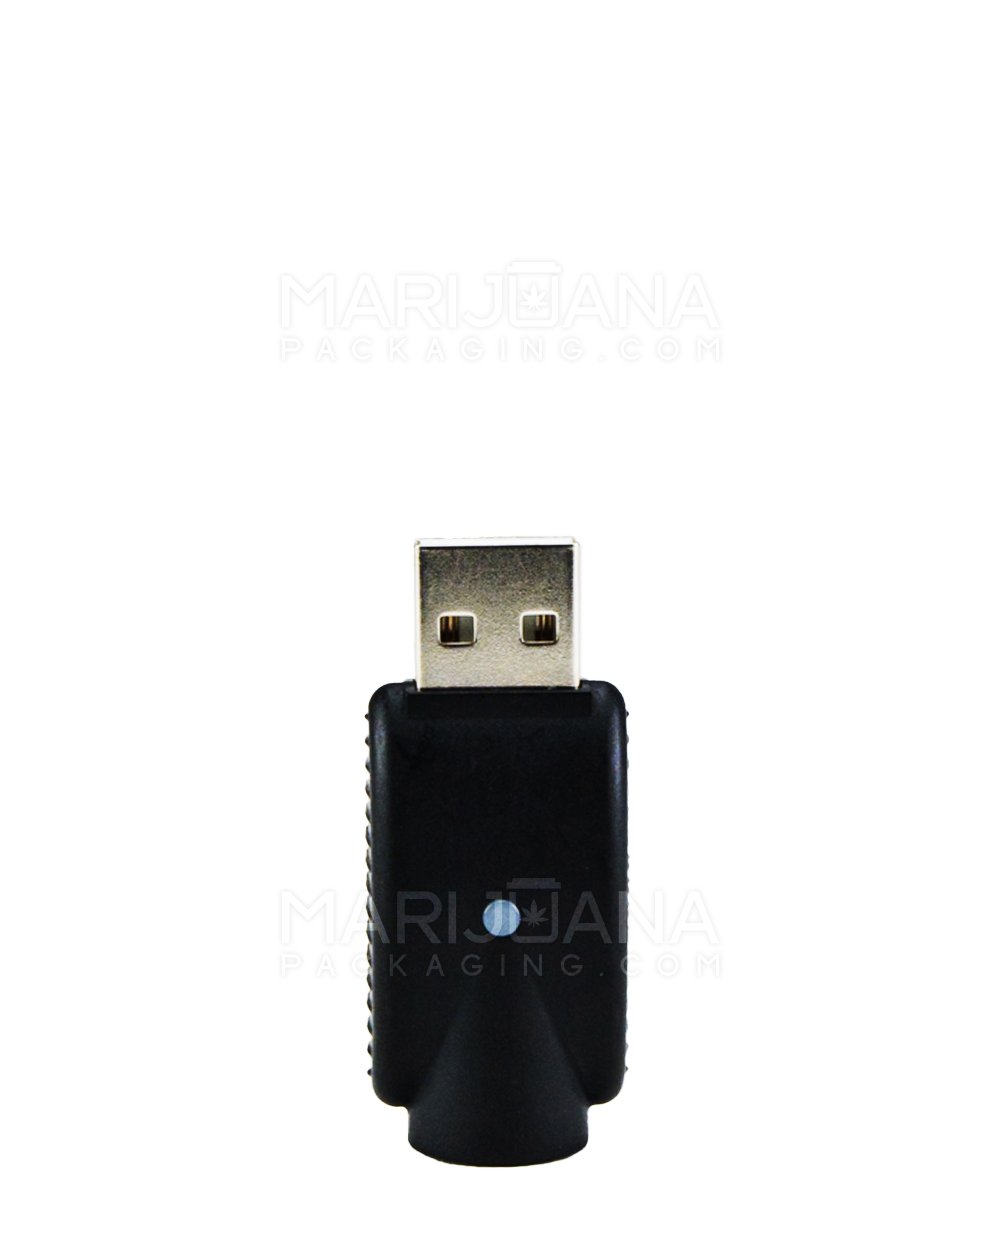 Buttonless USB Vape Battery Charger w/ LED Light | 510 Thread - 1